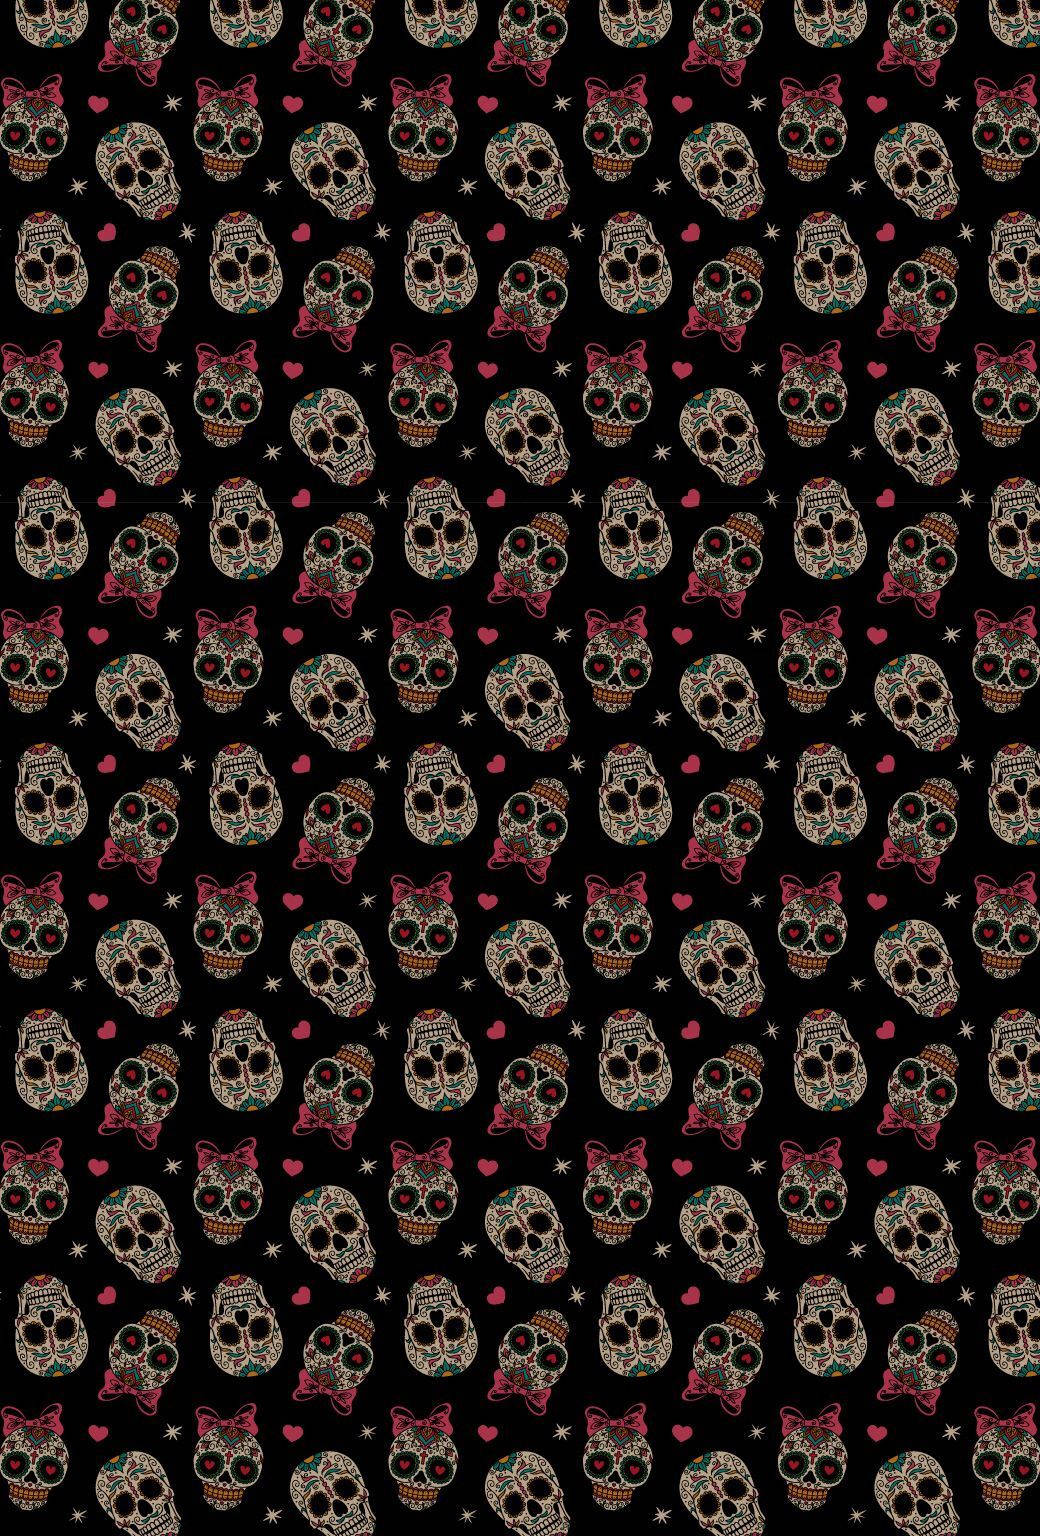 Crowded Sugar Skulls Wallpaper